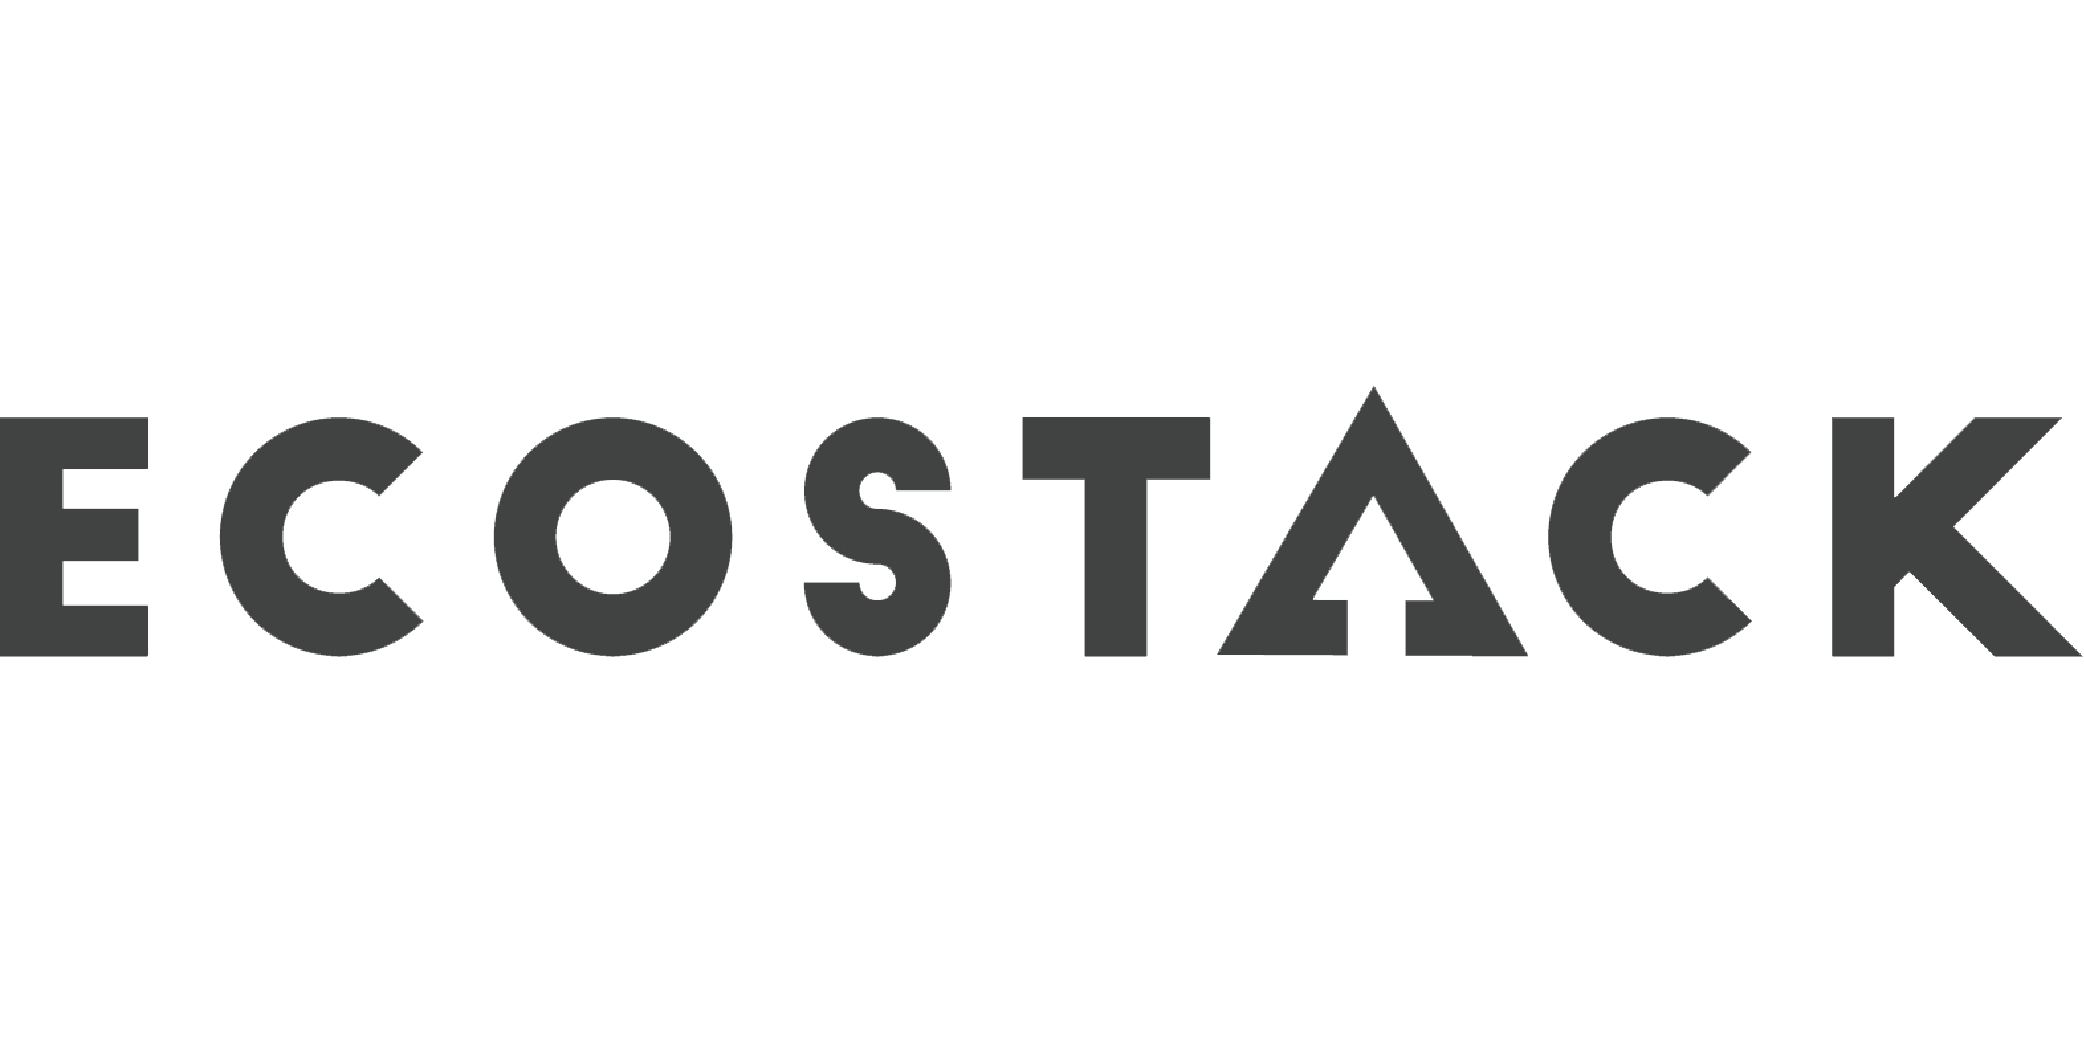 Brand Logos Cropped_EcoStack